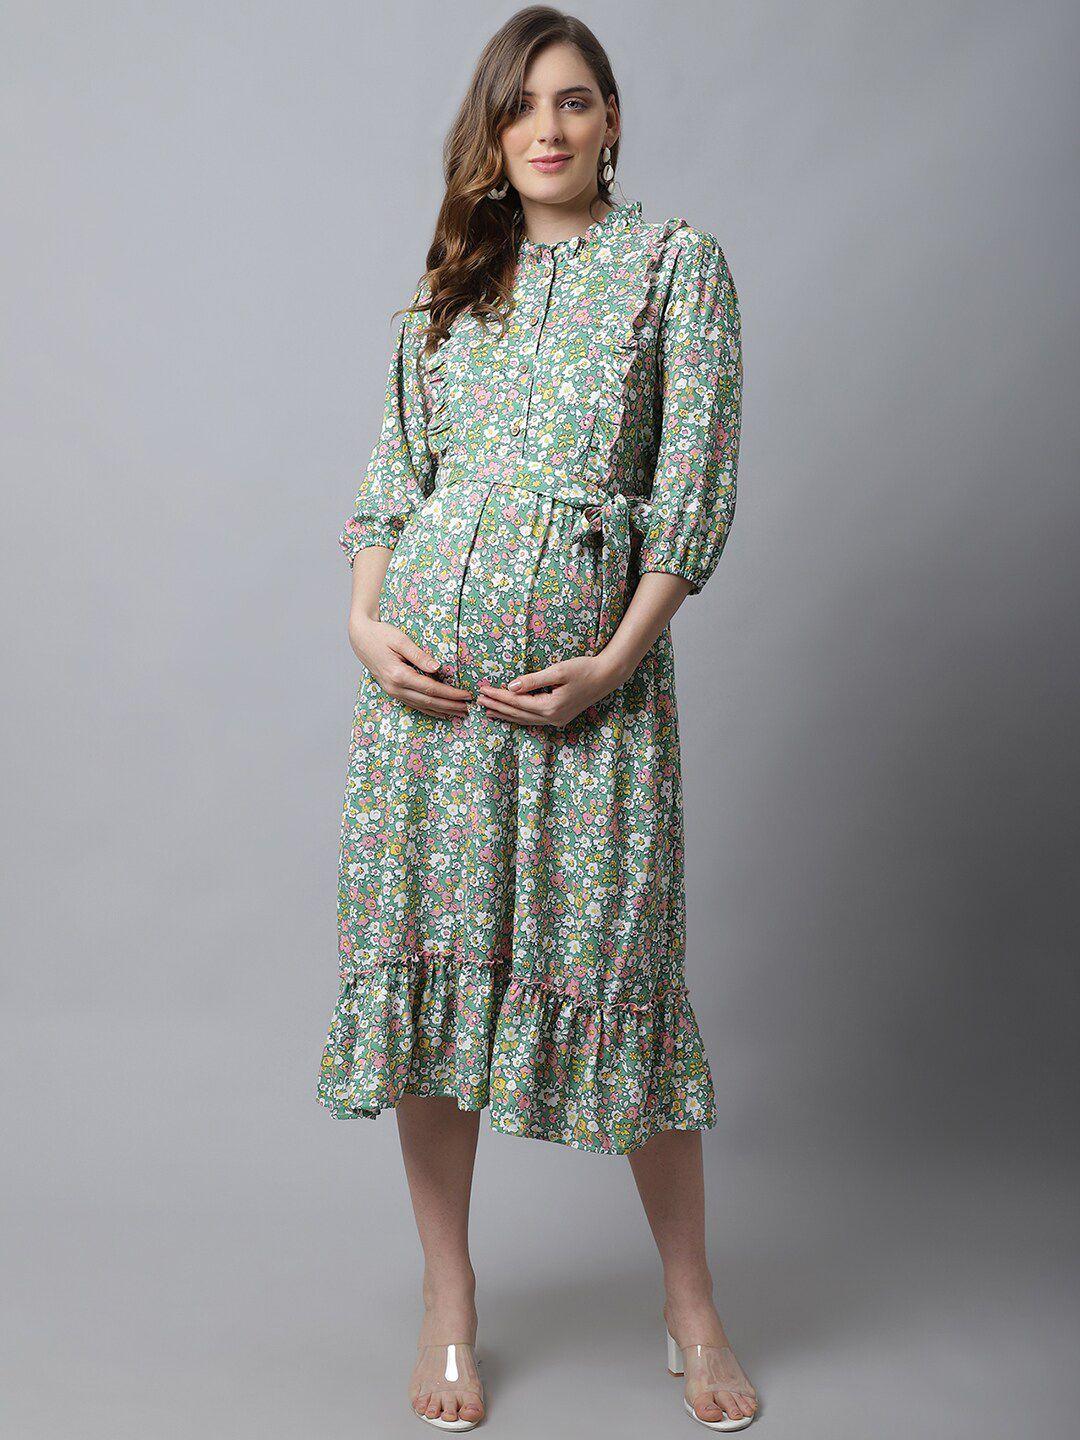 frempy sea green floral maternity a-line midi dress